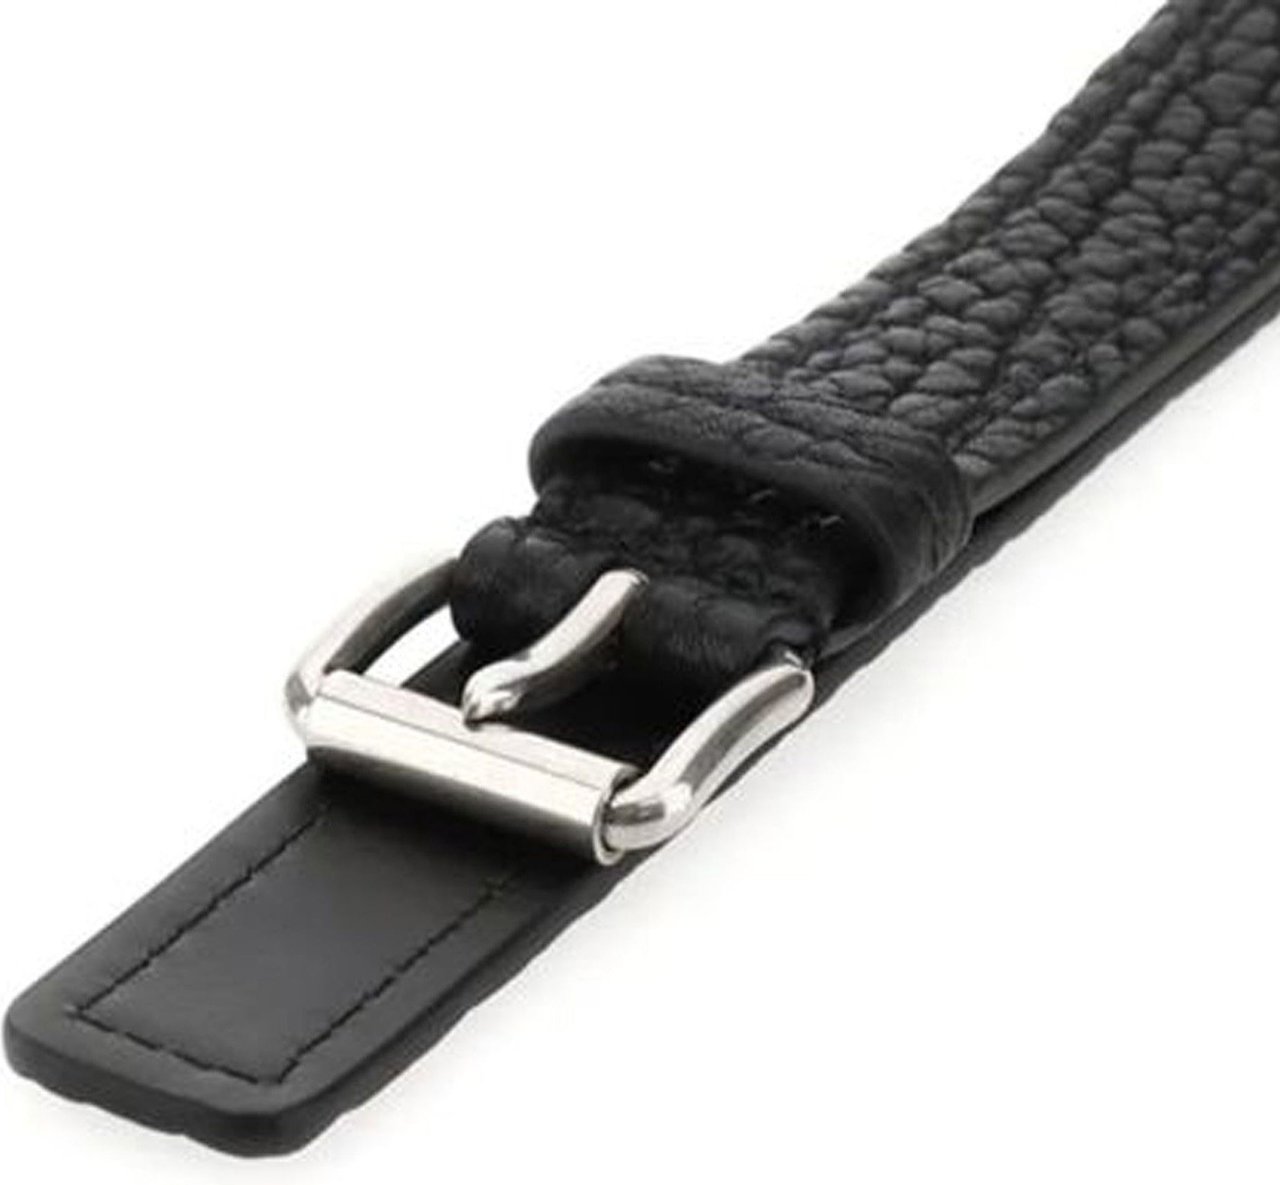 Prada PRADA Leather Belt Zwart